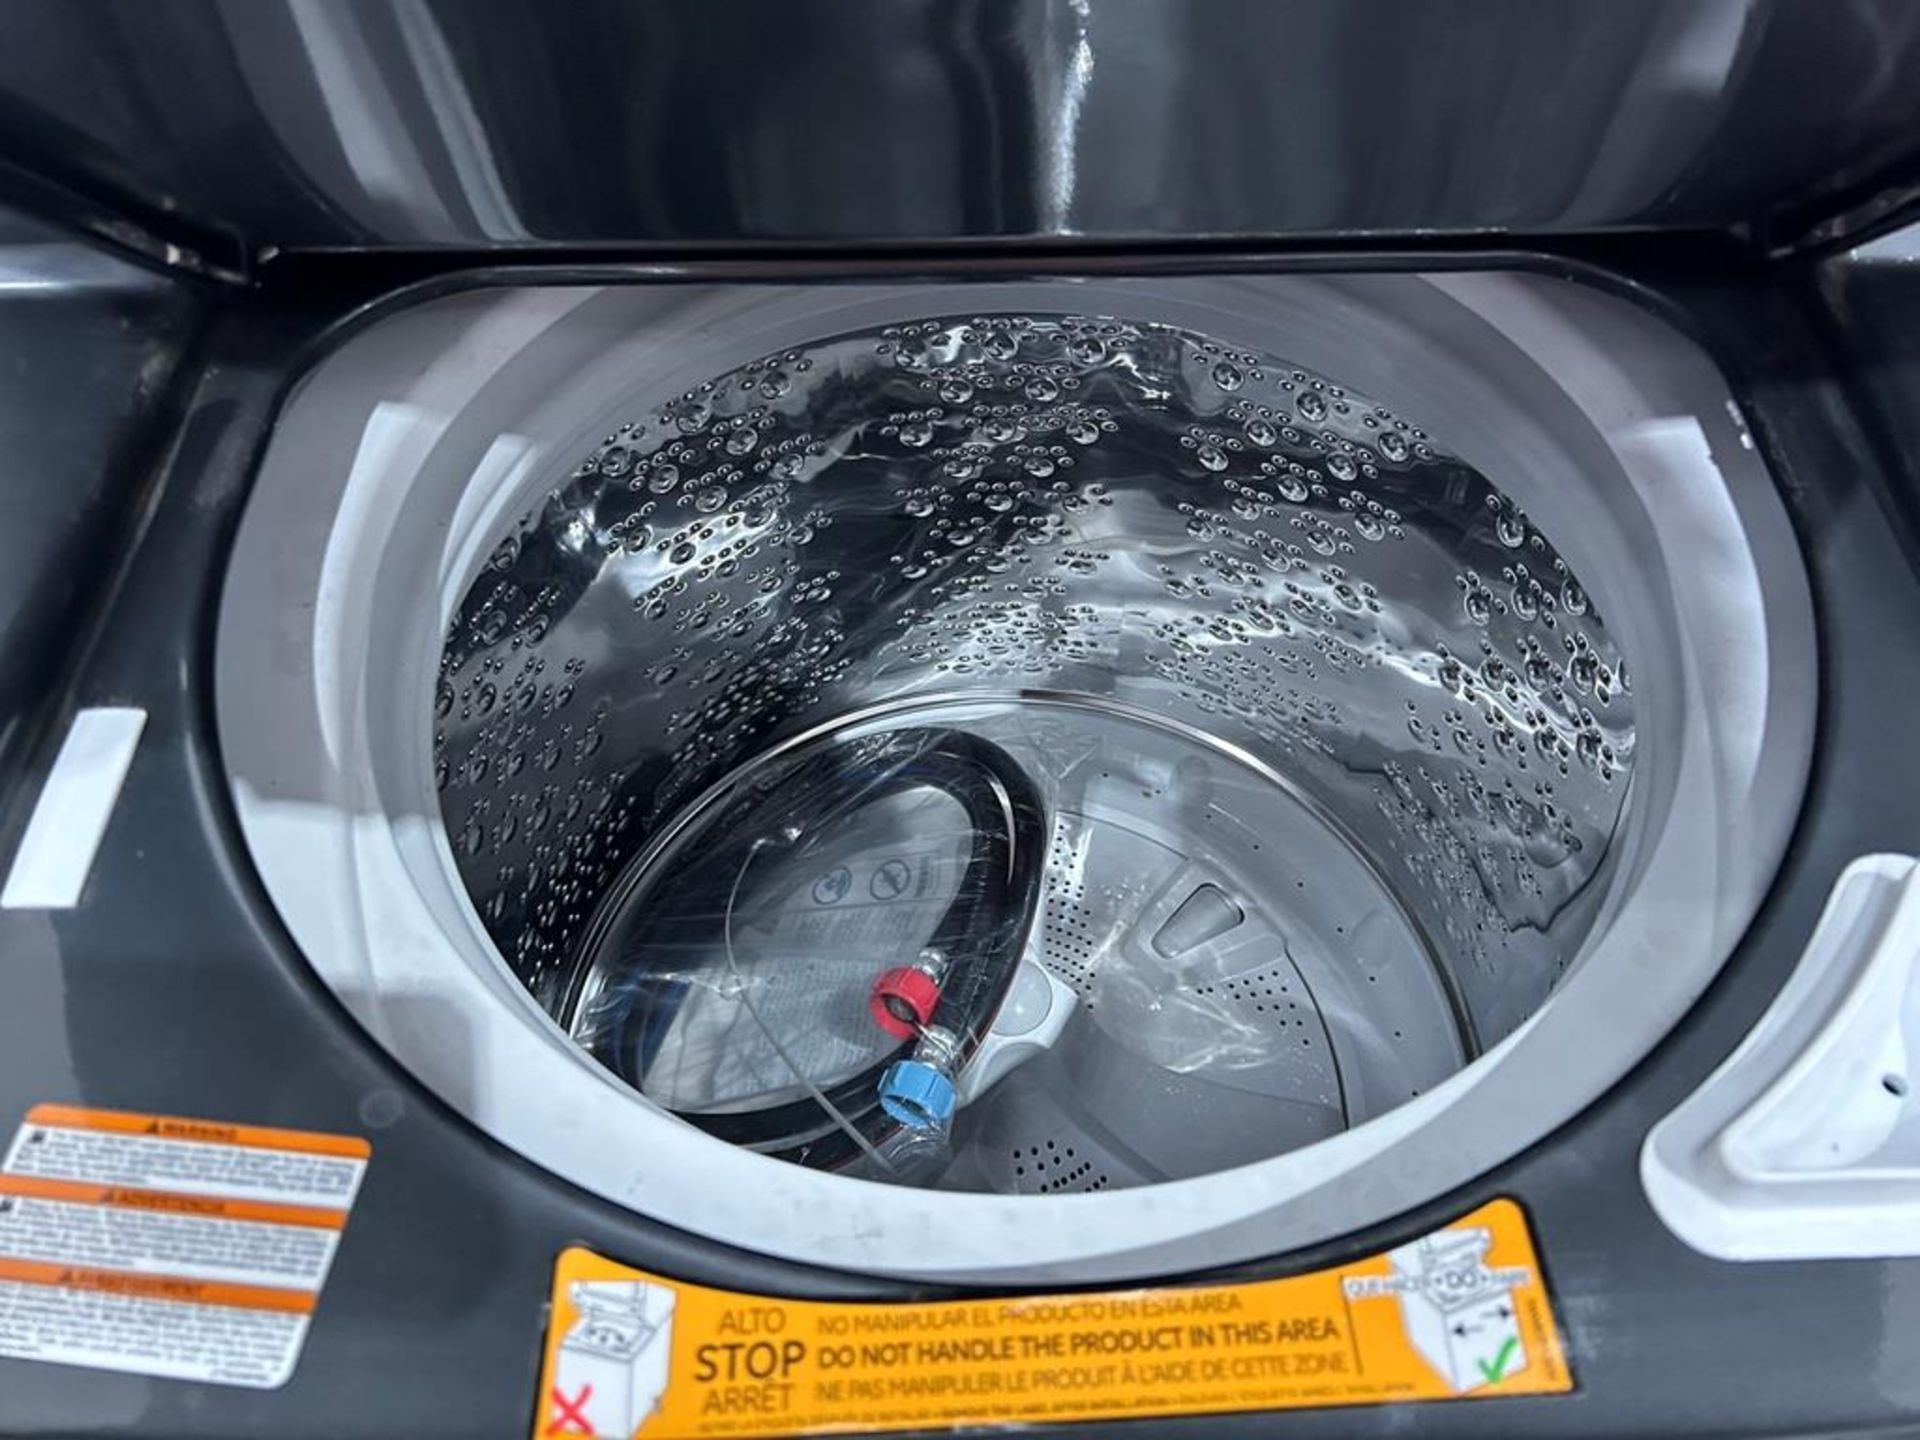 (NUEVO) Centro de lavado Marca MABE, Modelo MCL2040PSDG0, Serie 02035, Color NEGRO (Golpe superior) - Image 5 of 9